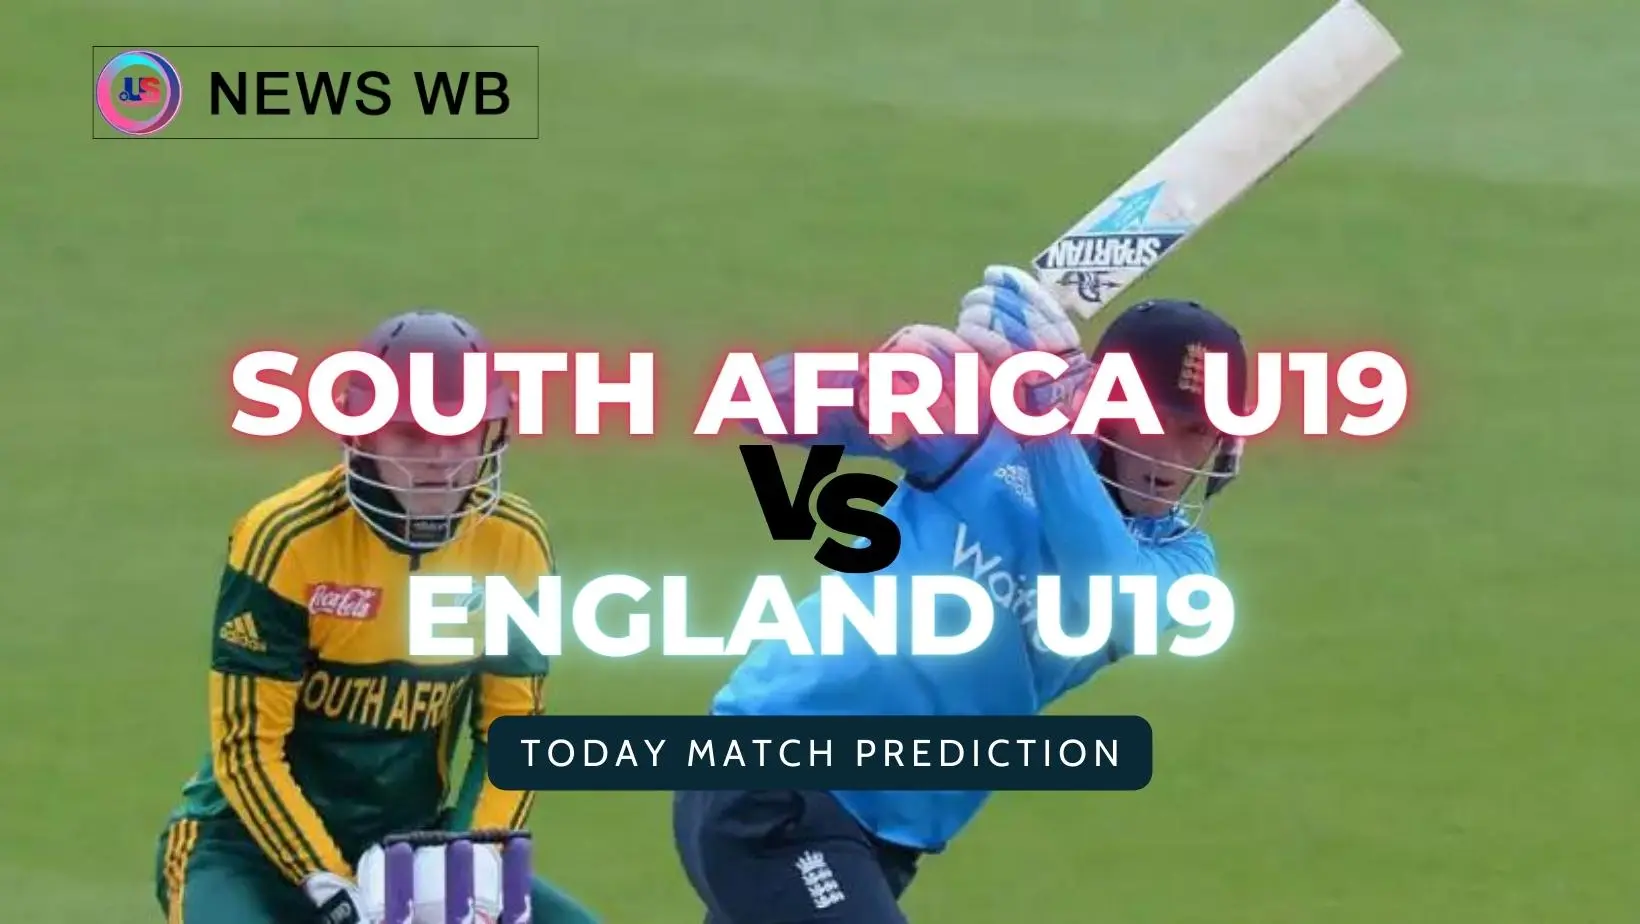 Today Match Prediction: RSA U19 vs ENG U19 Dream11 Team, South Africa U19 vs England U19 10th Match, Group B, Who Will Win?